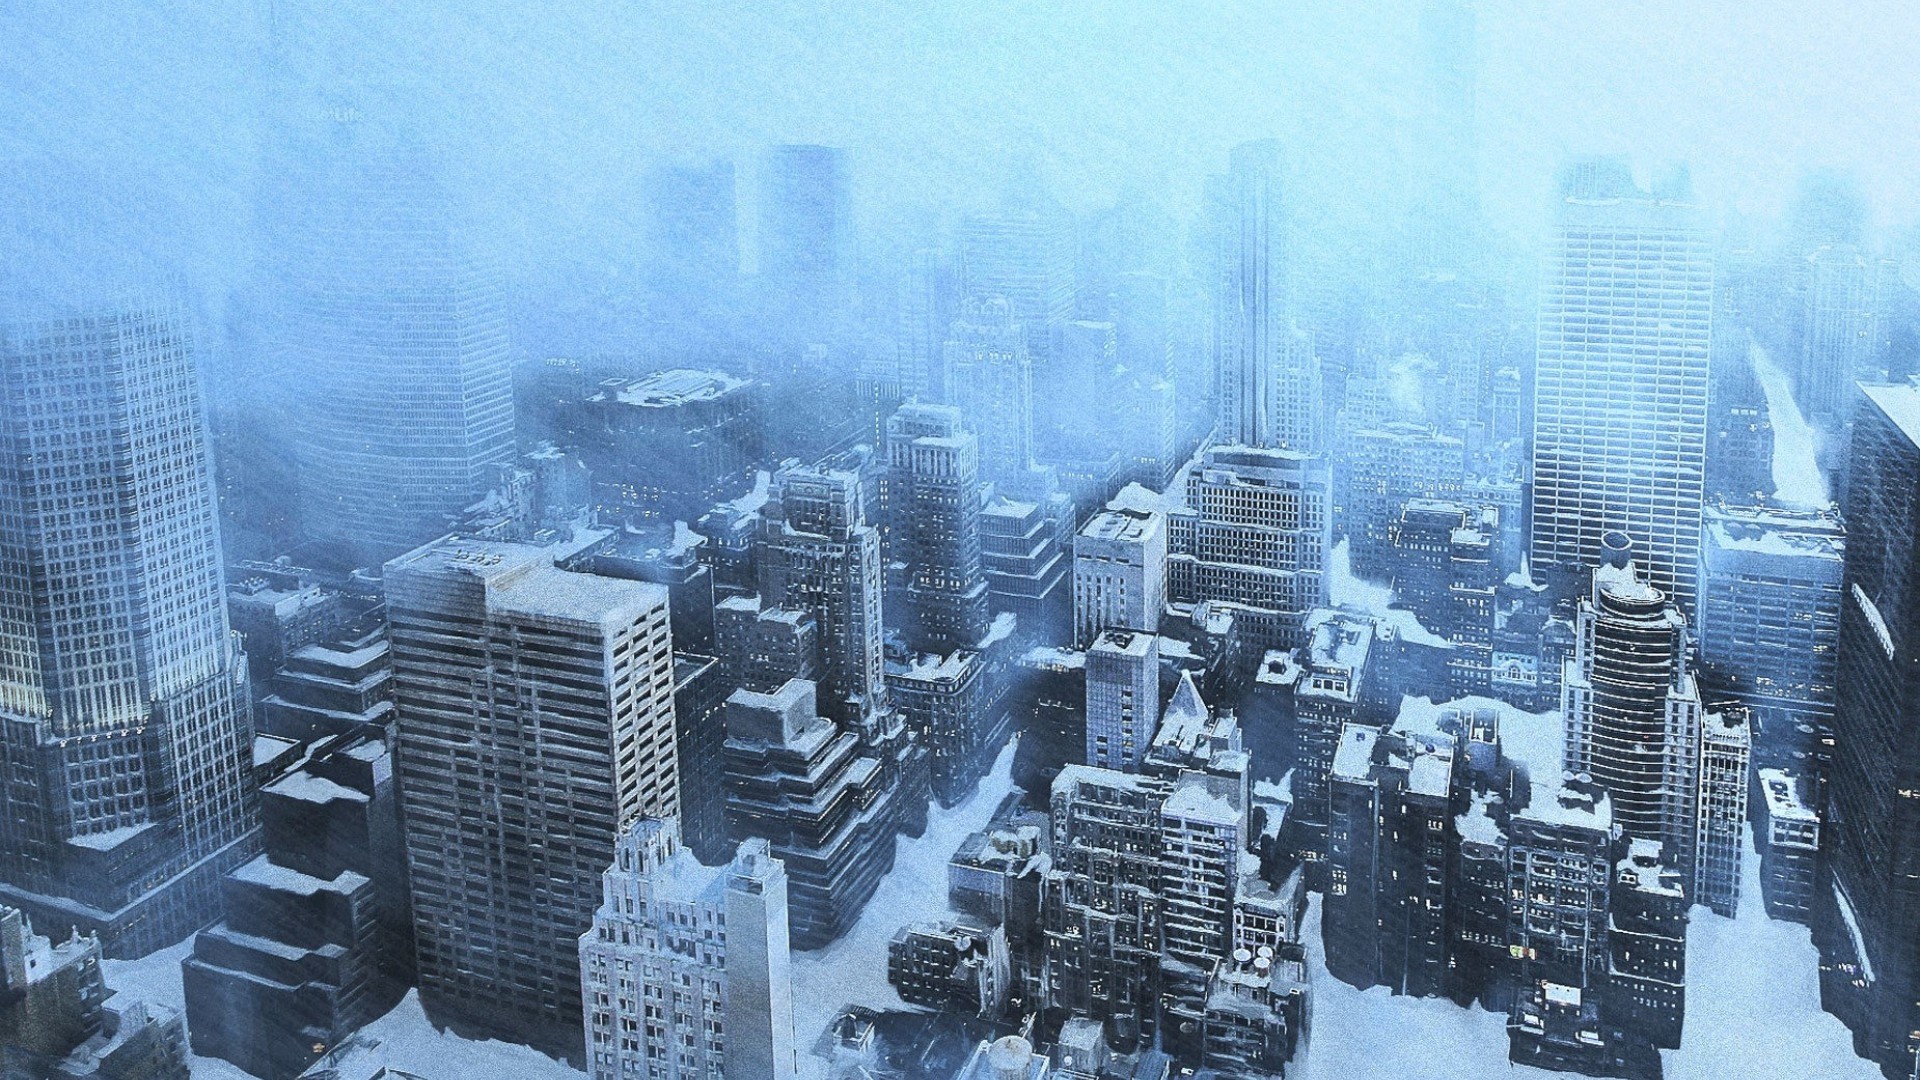 1920x1080 Snow falling on skyscrapers, New York City: